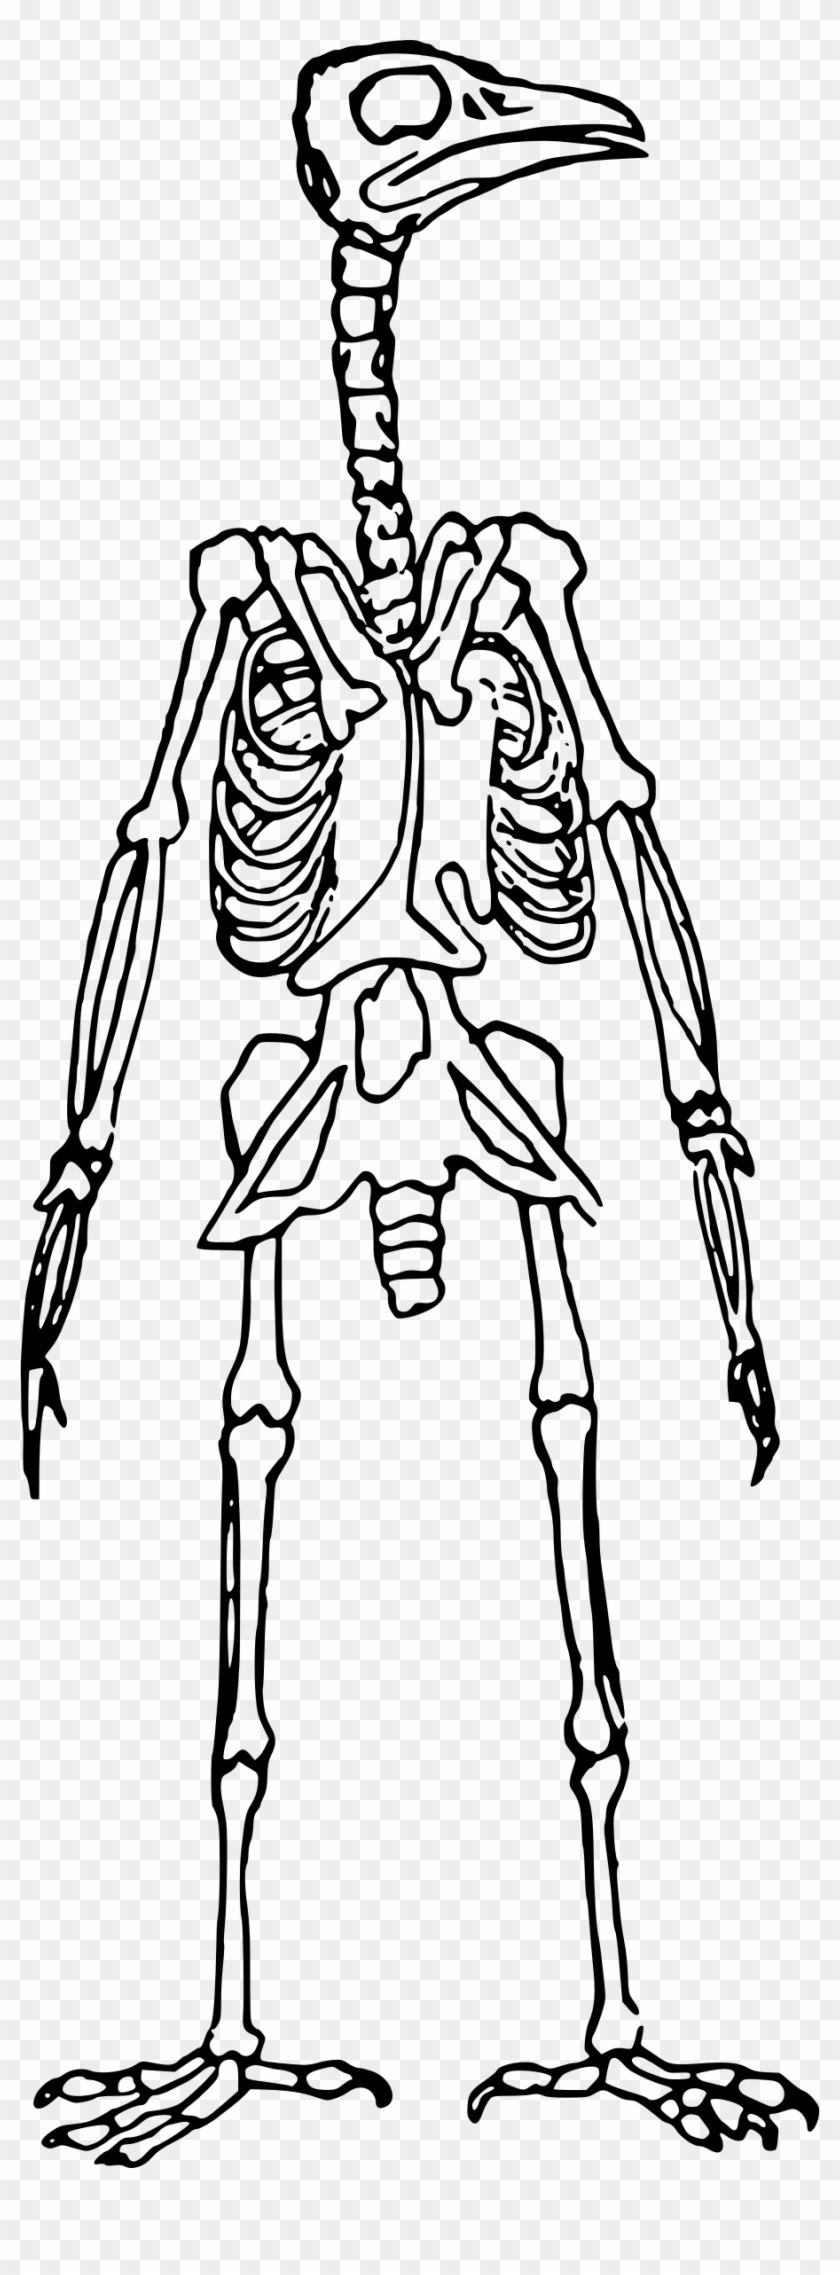 This Free Icons Png Design Of Bird Skeleton Standing - Bird Skeleton Clip Art Transparent Png #5461519